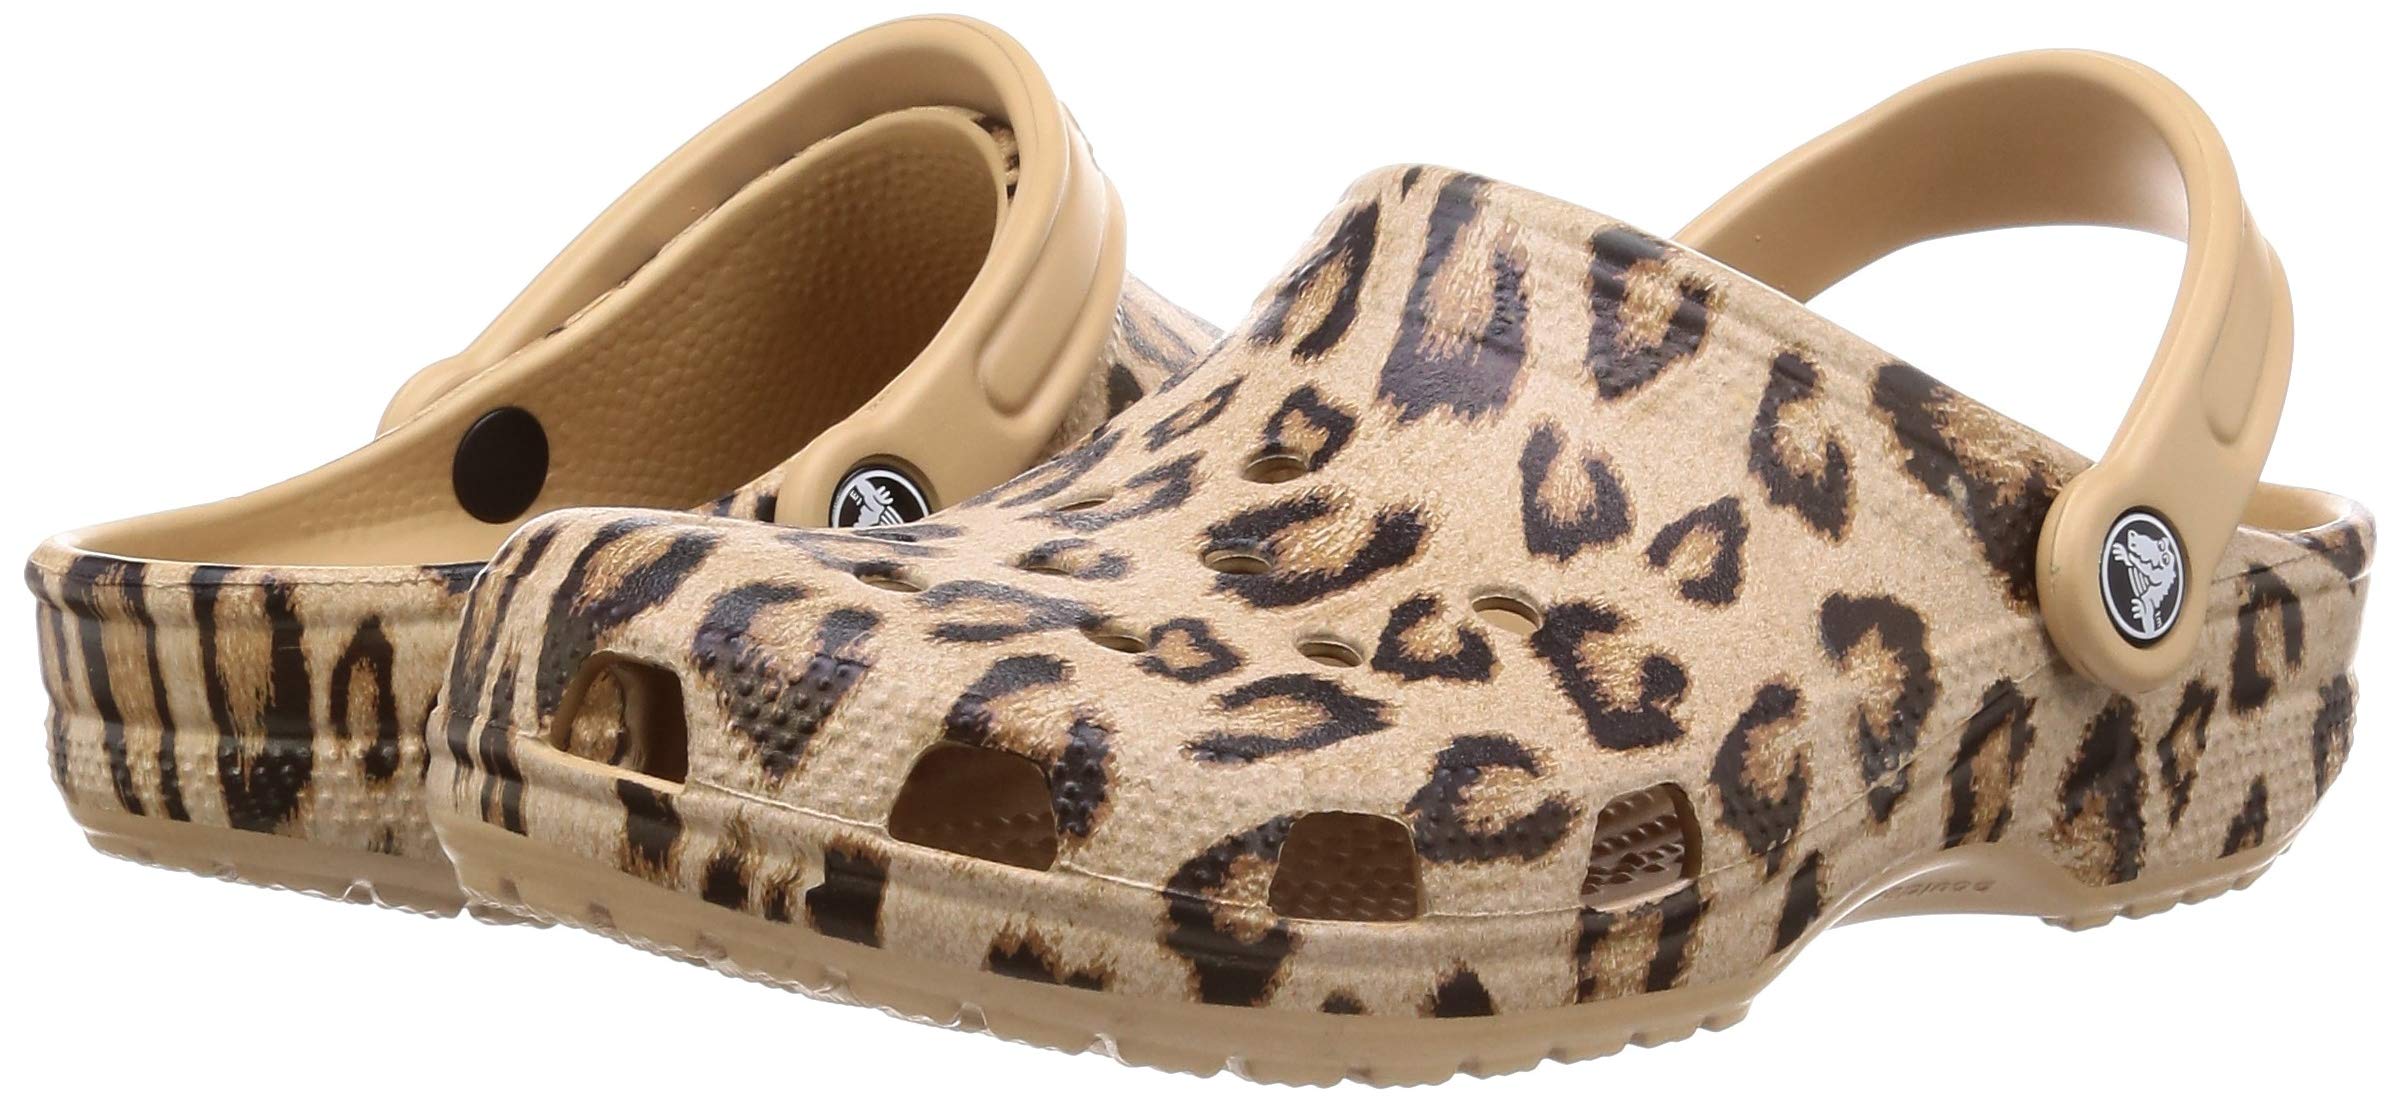 Crocs Women's Men's Classic Animal Print Clog | Zebra and Leopard Shoes